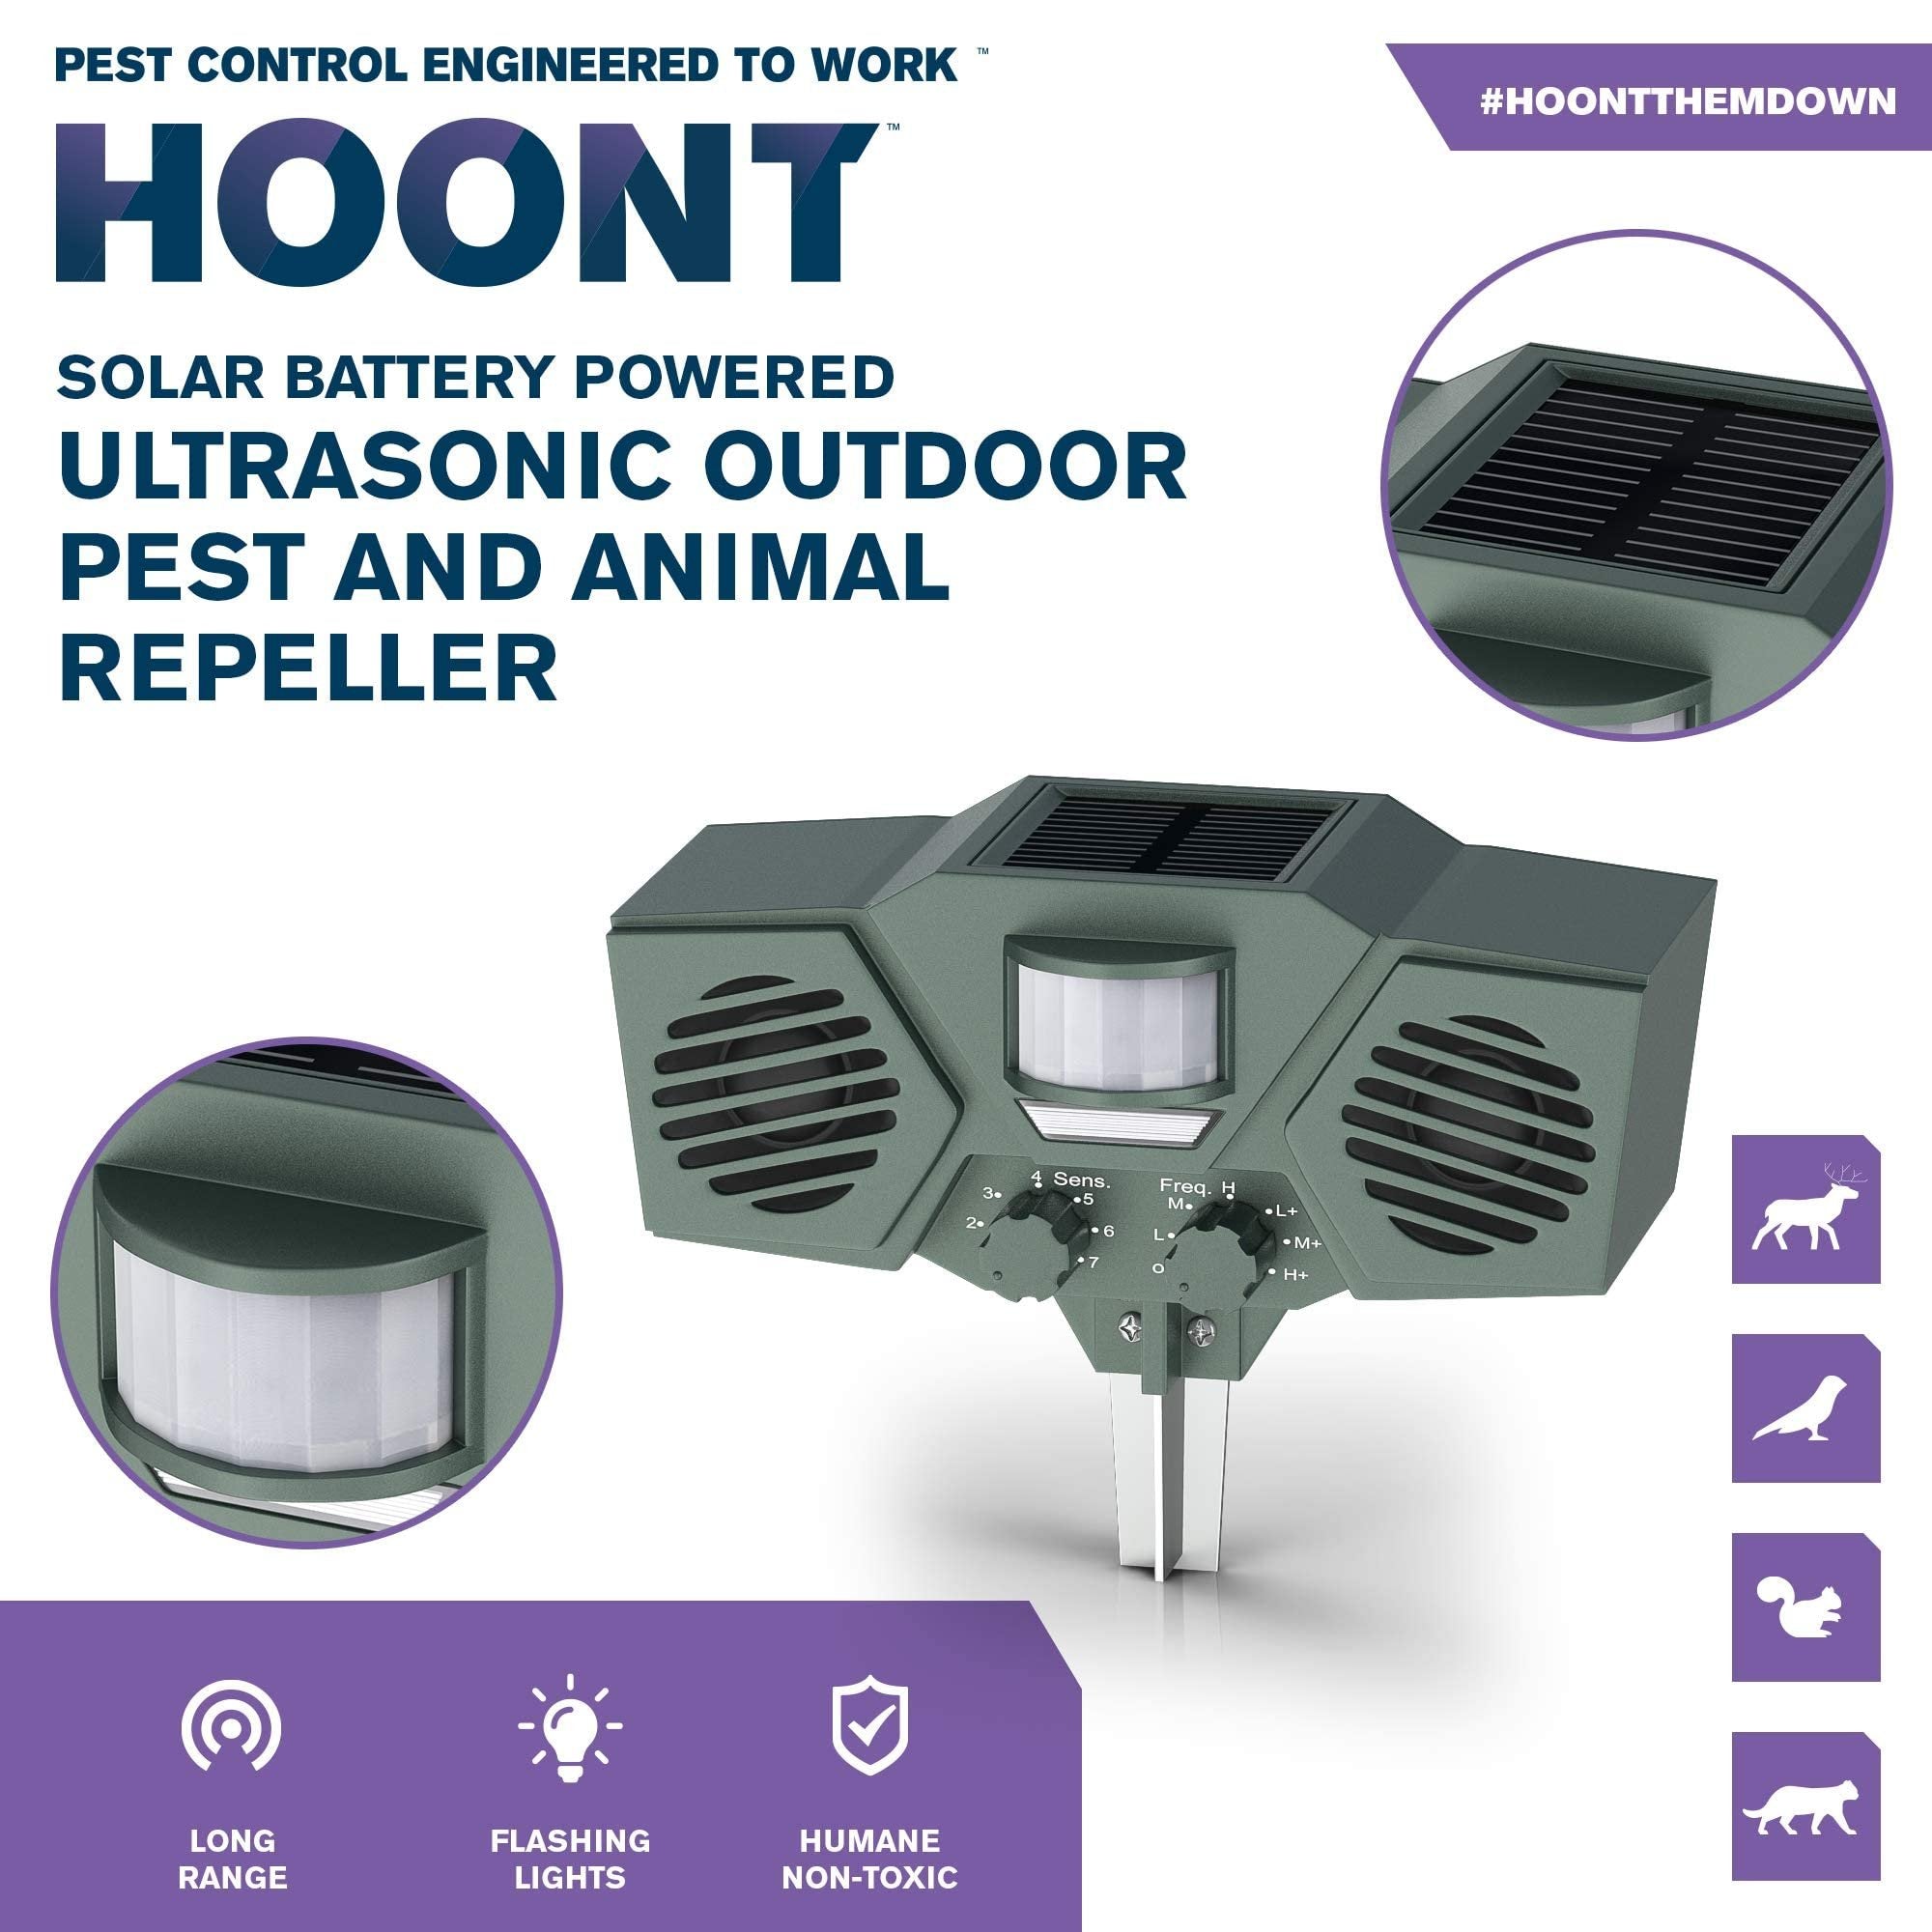 Hoont Green Solar Ultrasonic Animal & Pest Repeller - Motion Activated, Flashing Strobe (1 Count)